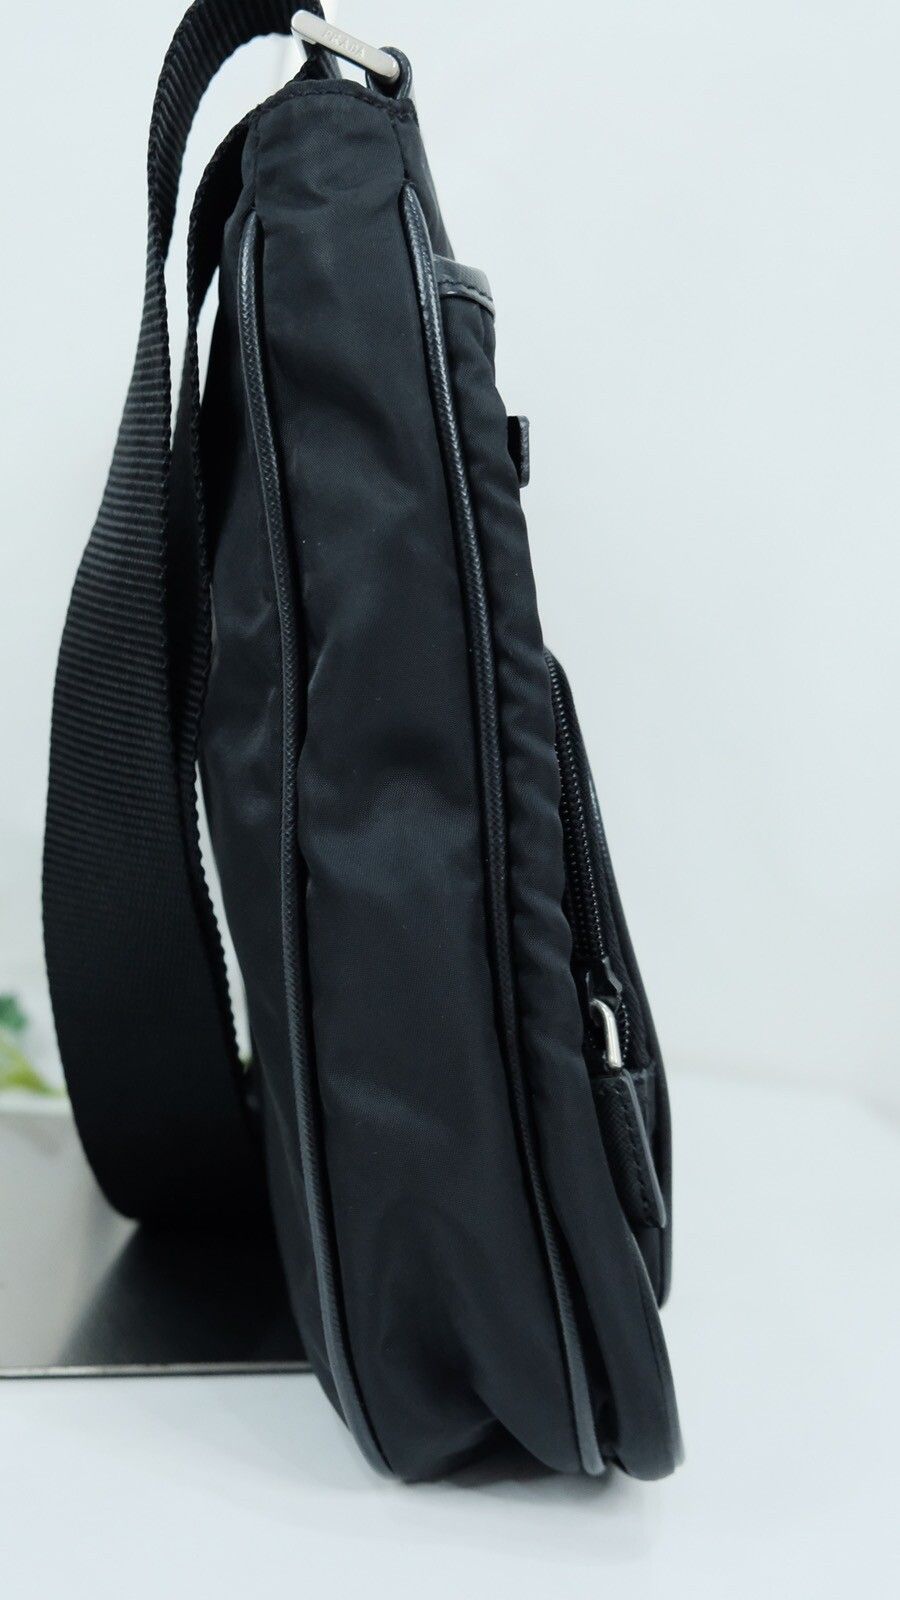 Authentic prada sling bag black nylon - 4